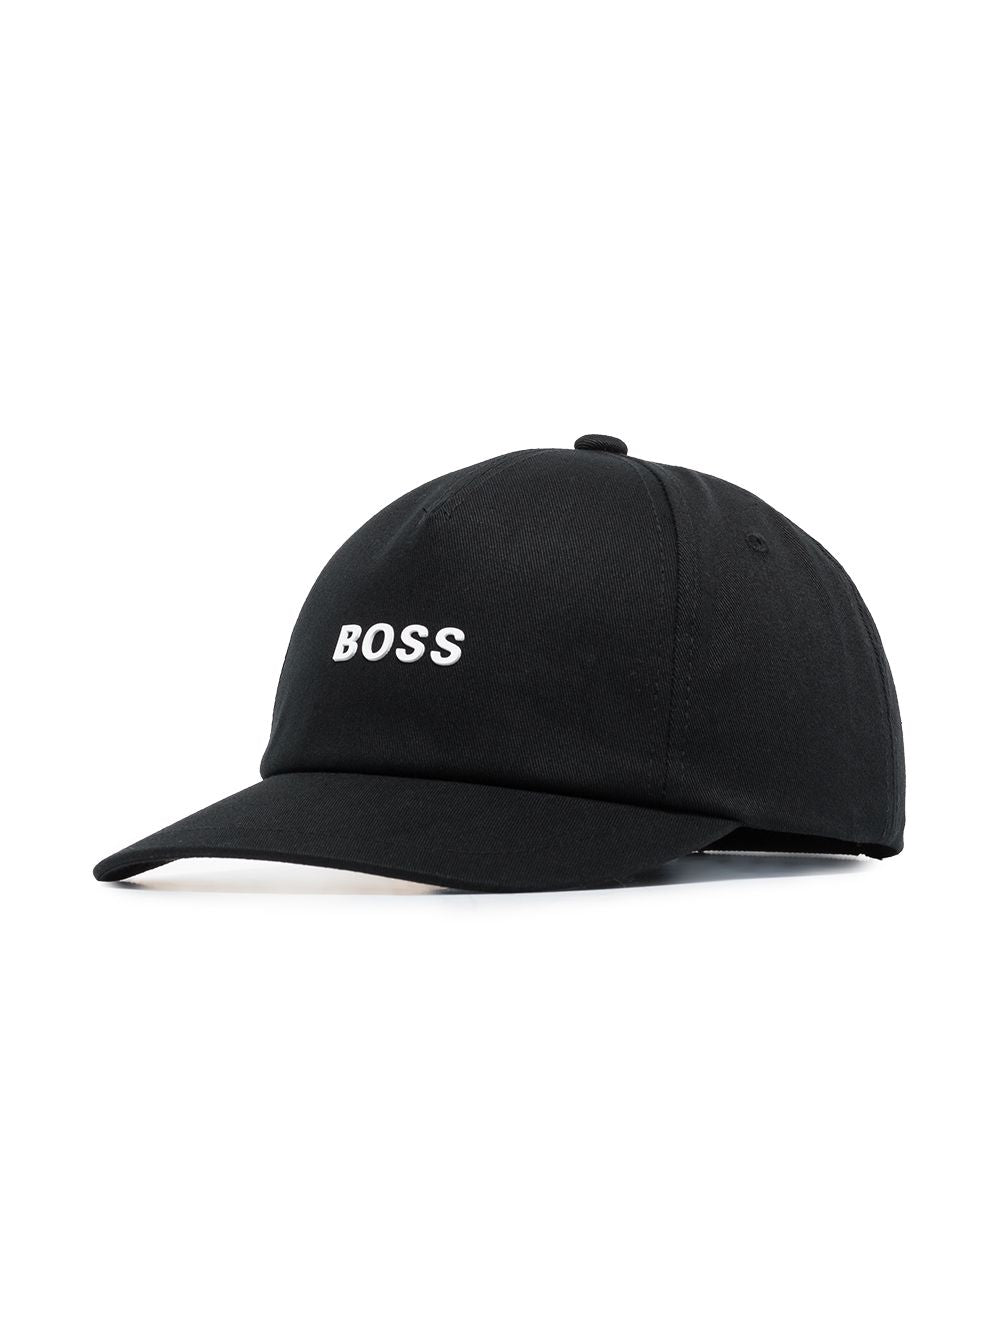 BOSS Raised logo baseball cap Black - MAISONDEFASHION.COM